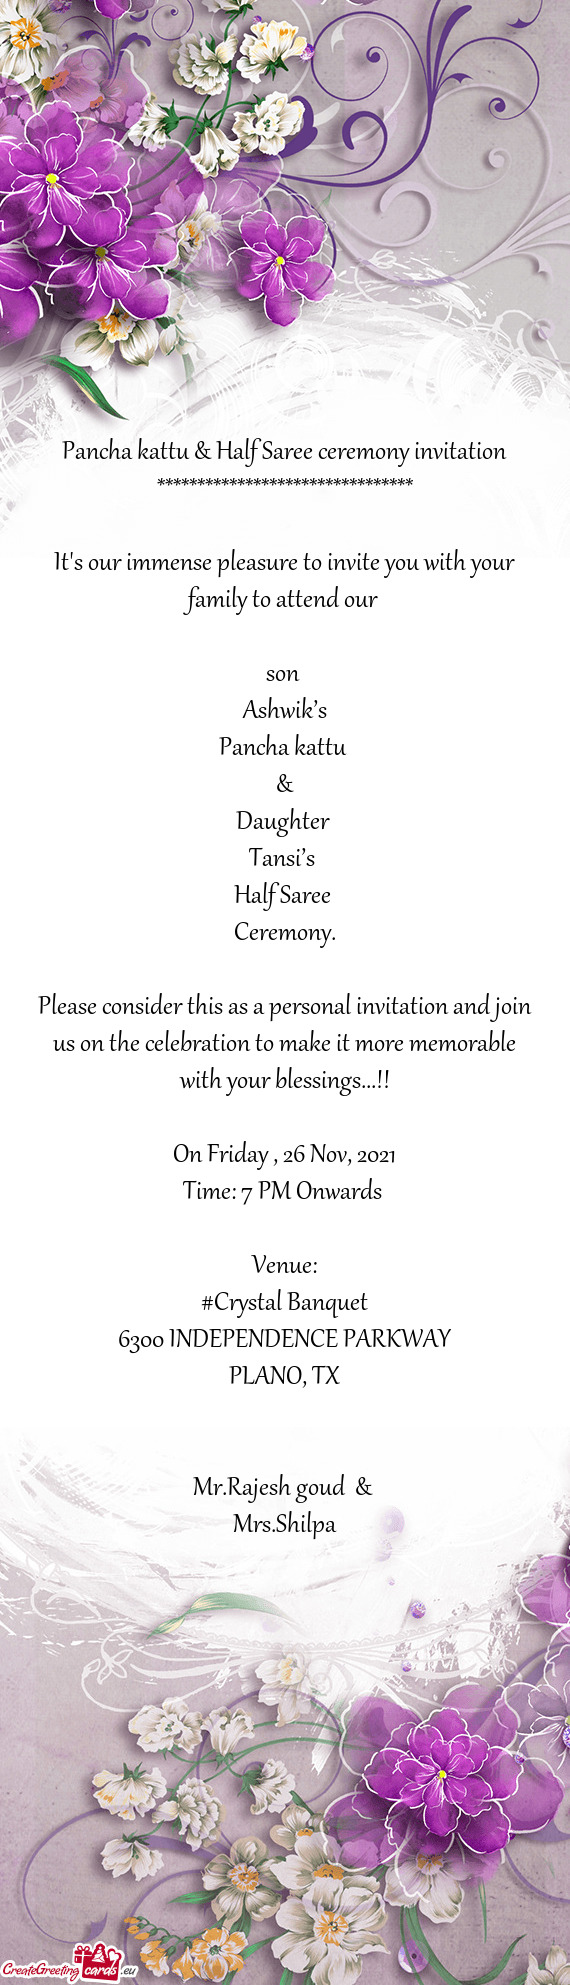 Pancha kattu & Half Saree ceremony invitation